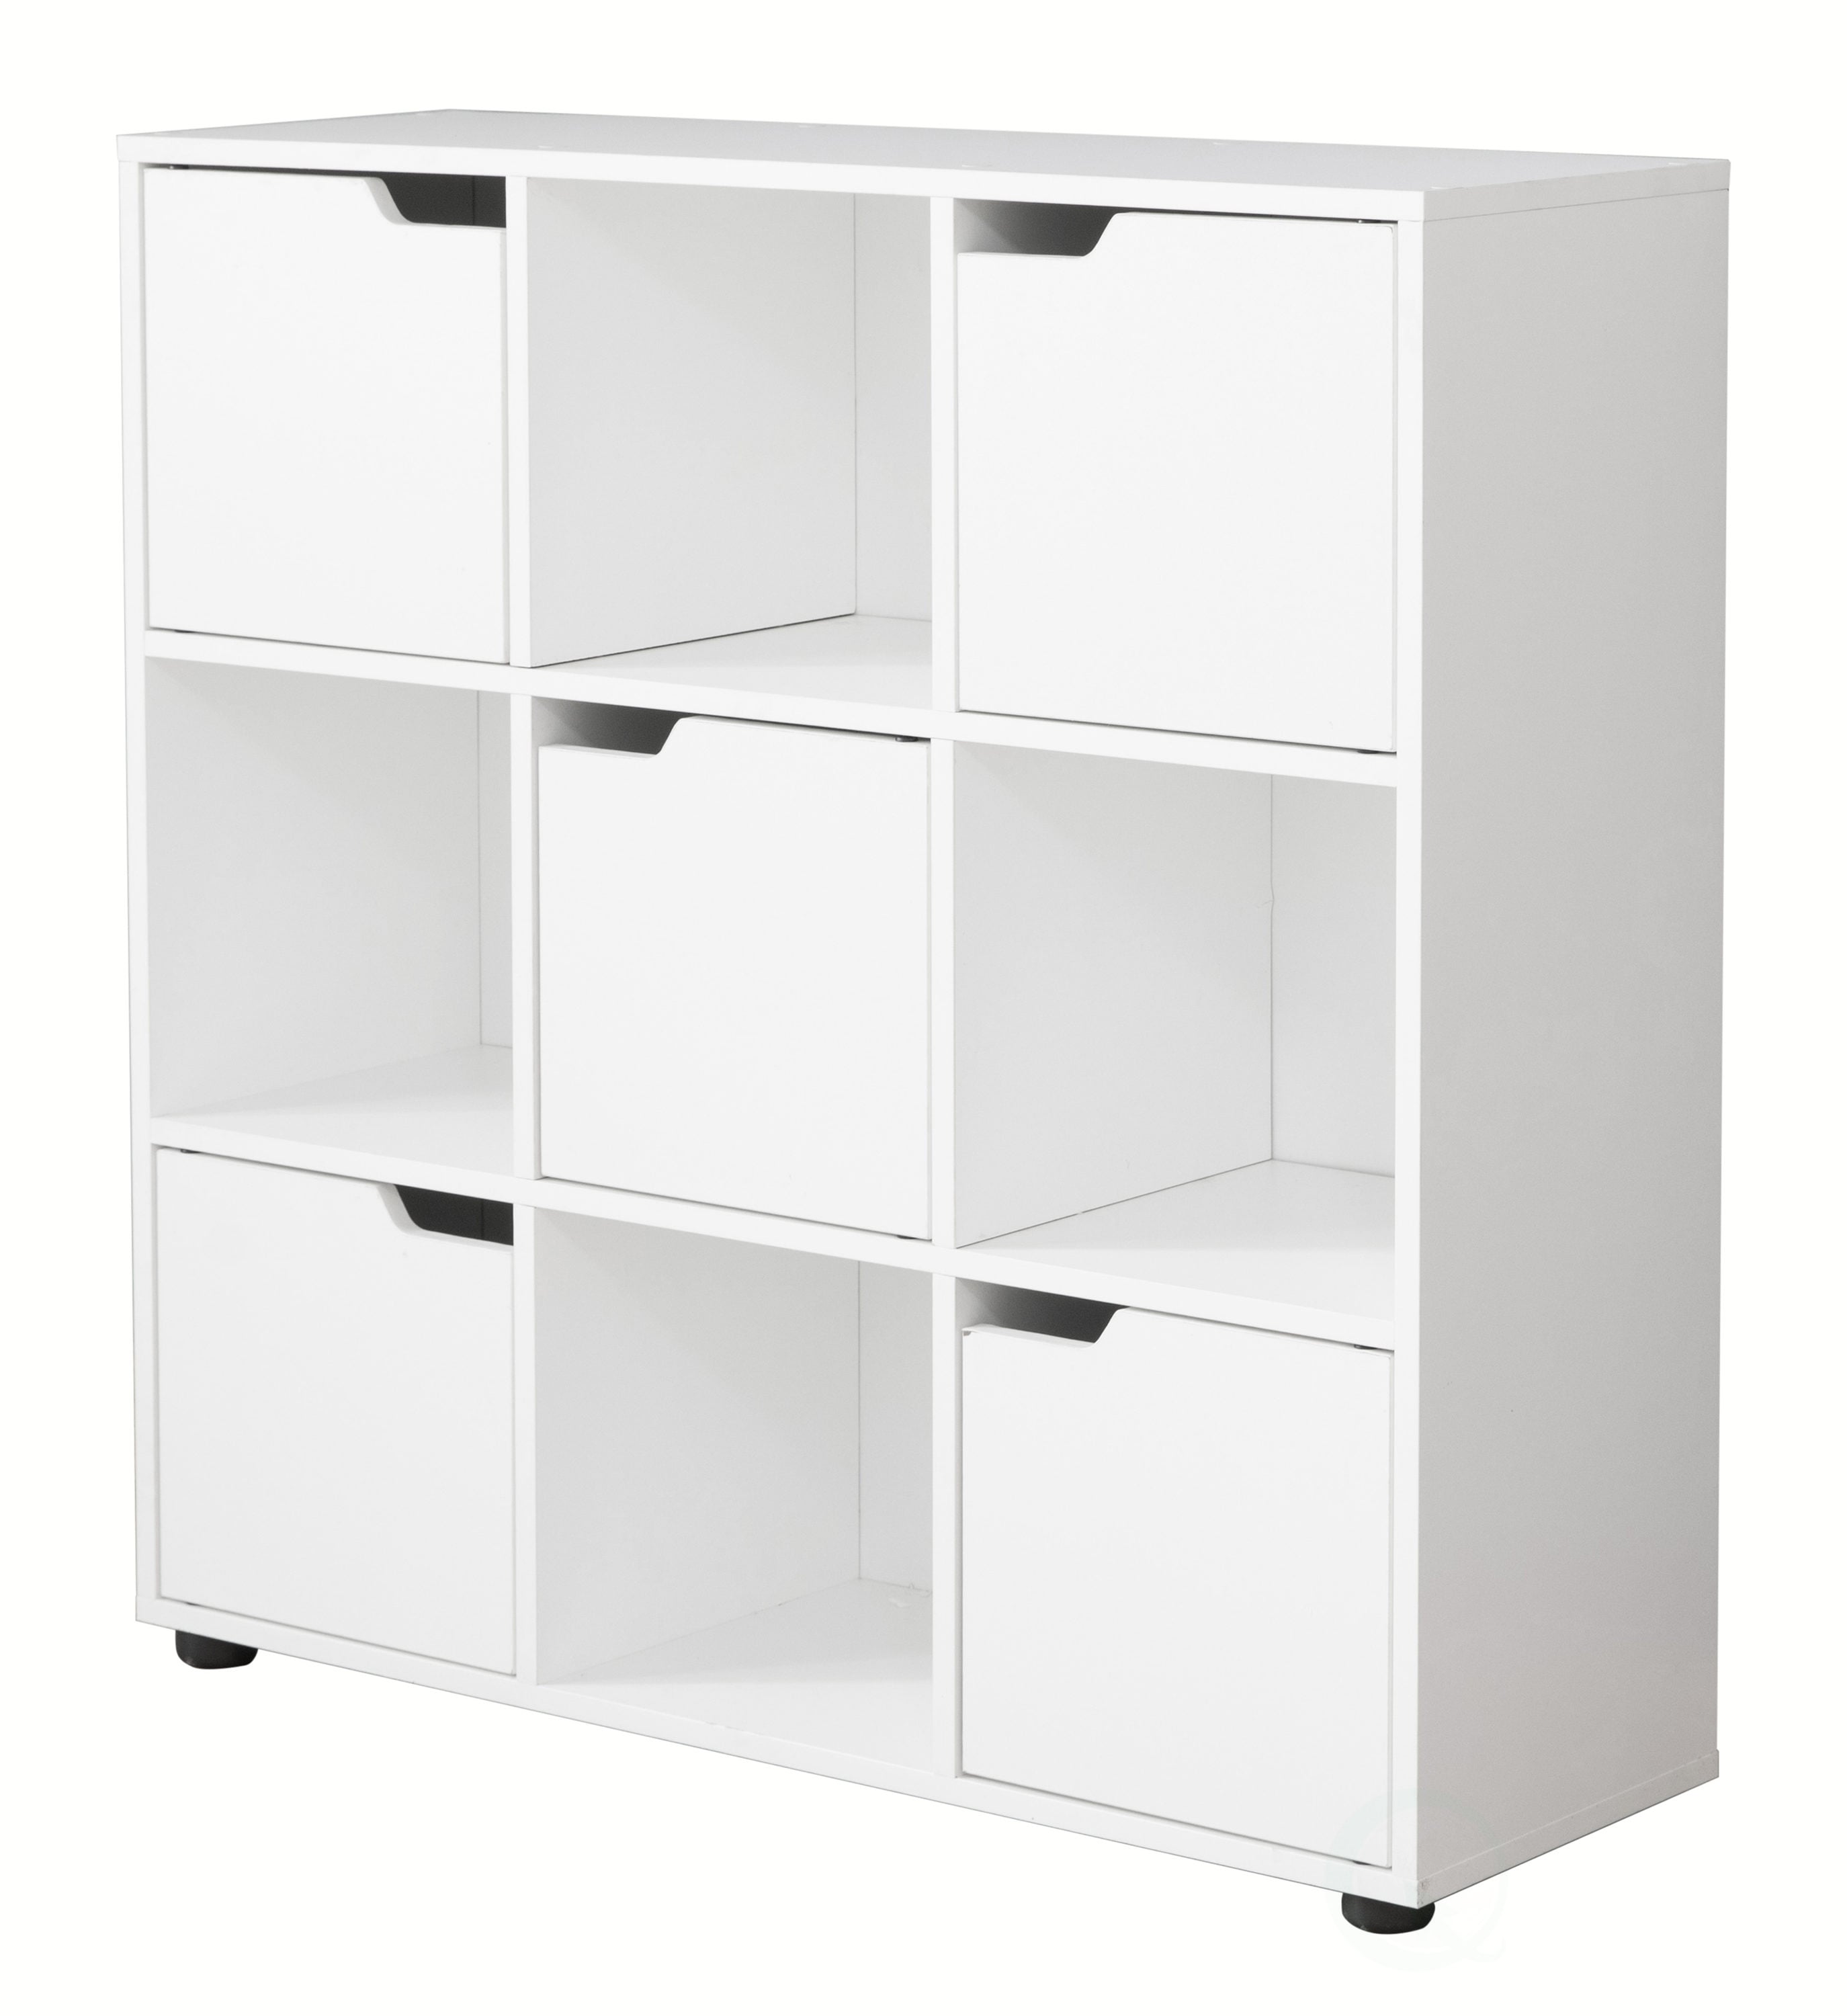 9 Cubes Wood Storage Bookcase Display Unit Stand Book Shelves Shelving Rack Door 